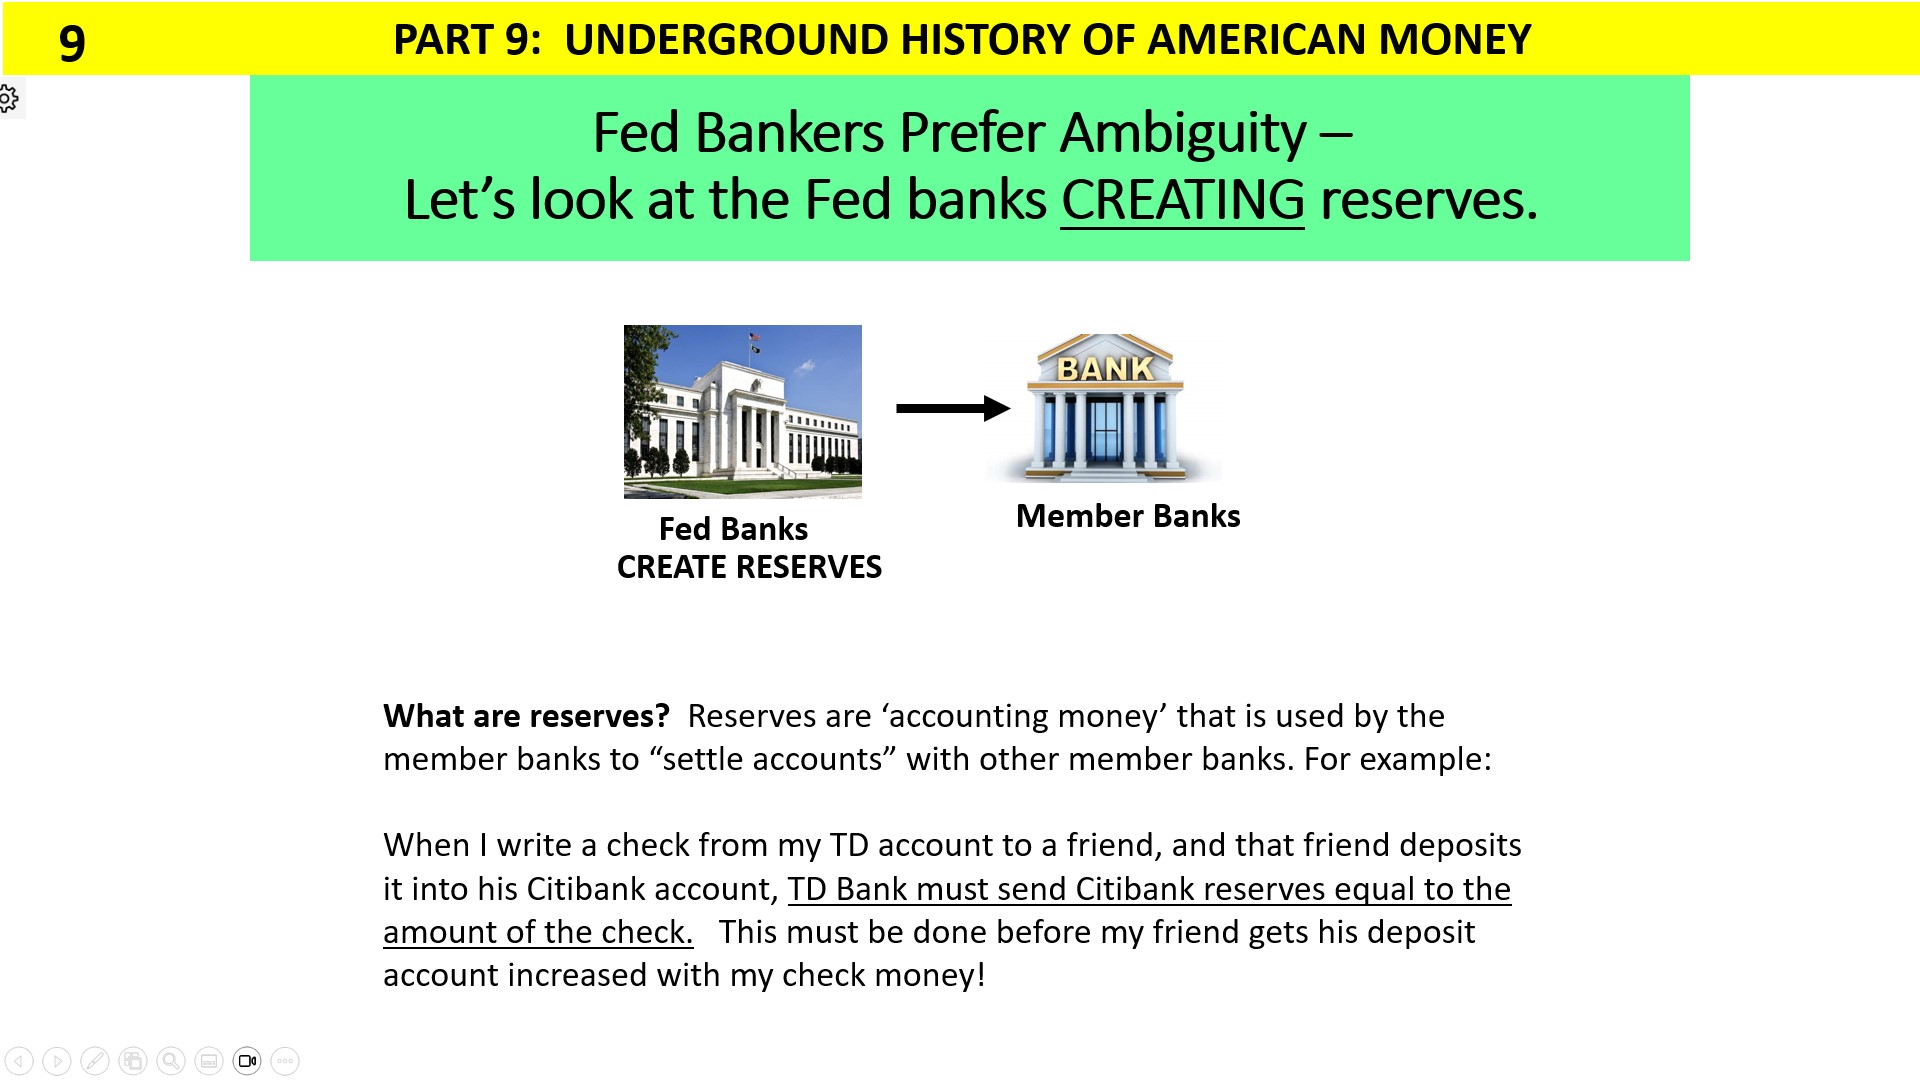 Federal Reserve Regional Banks create reserves and memeber banks create money by creating deposits,